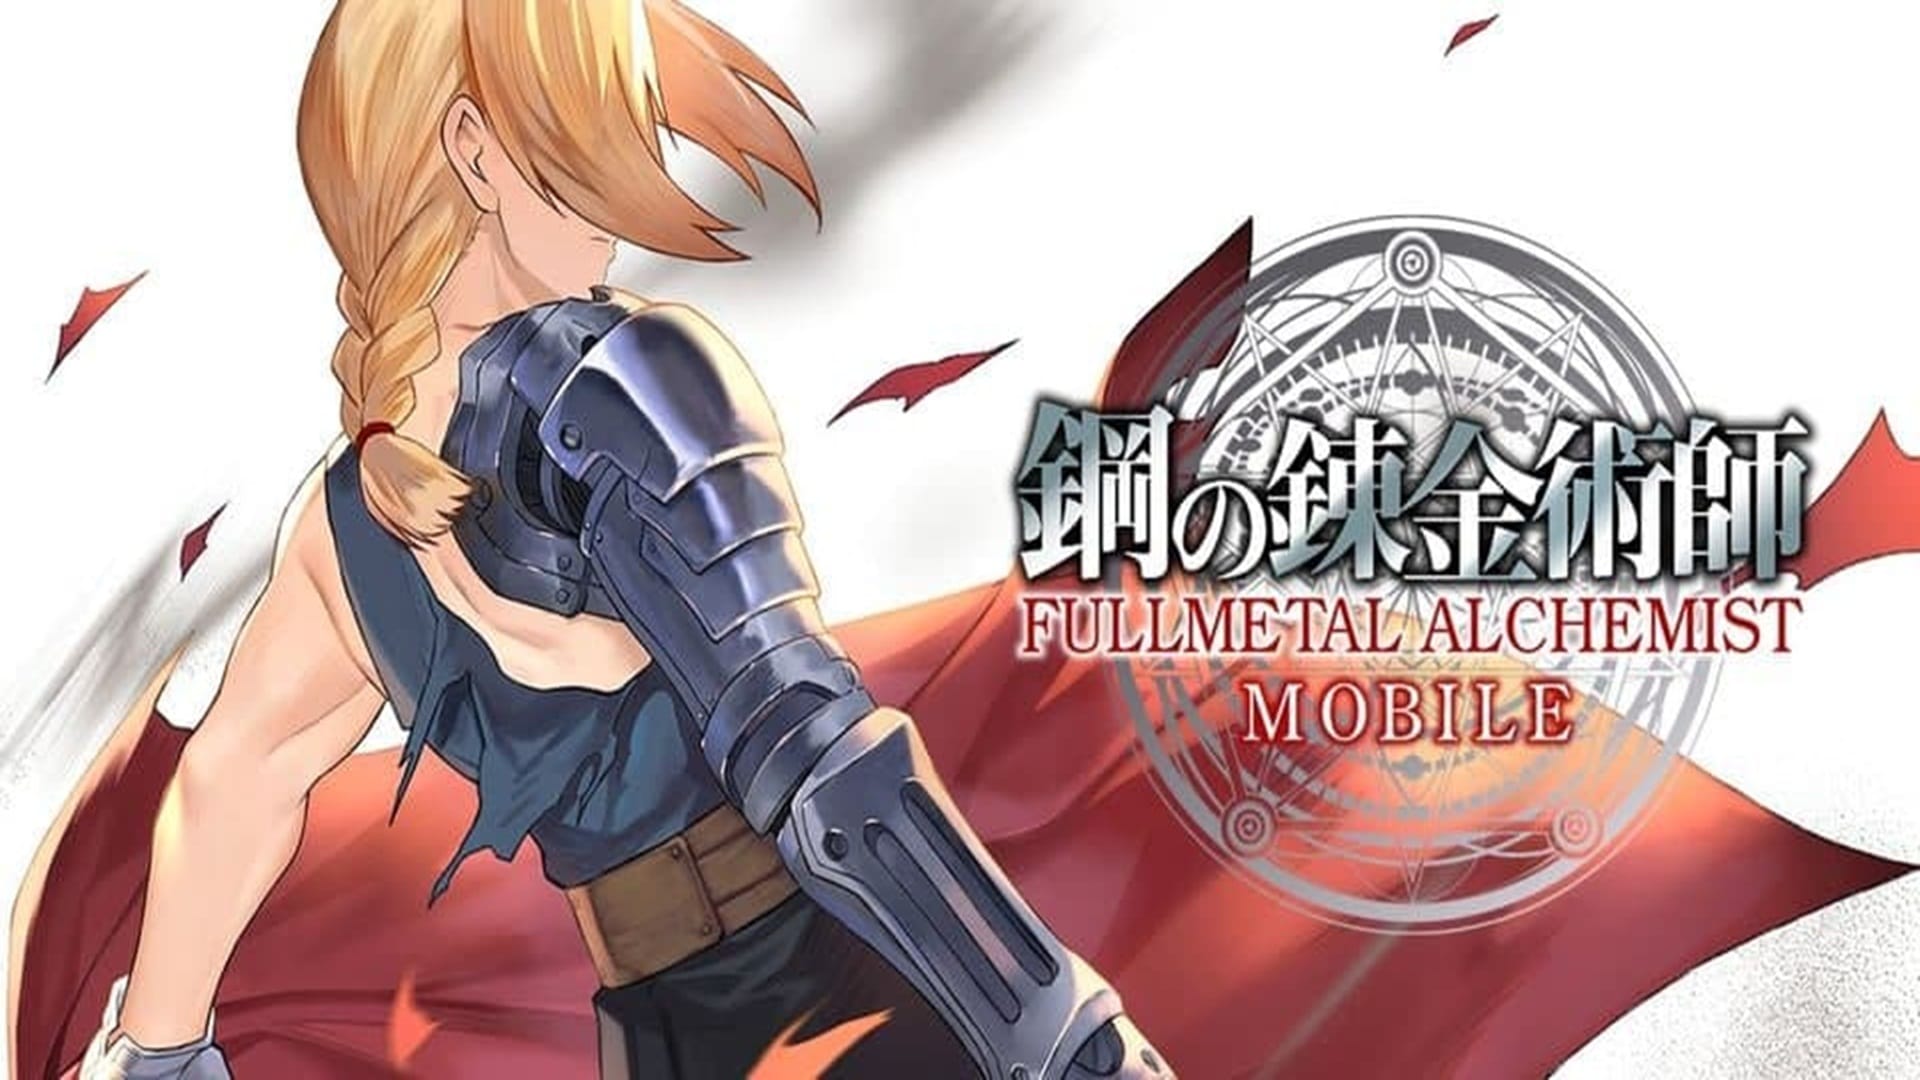 Se revela el tráiler de presentación de Fullmetal Alchemist Mobile, GamersRD